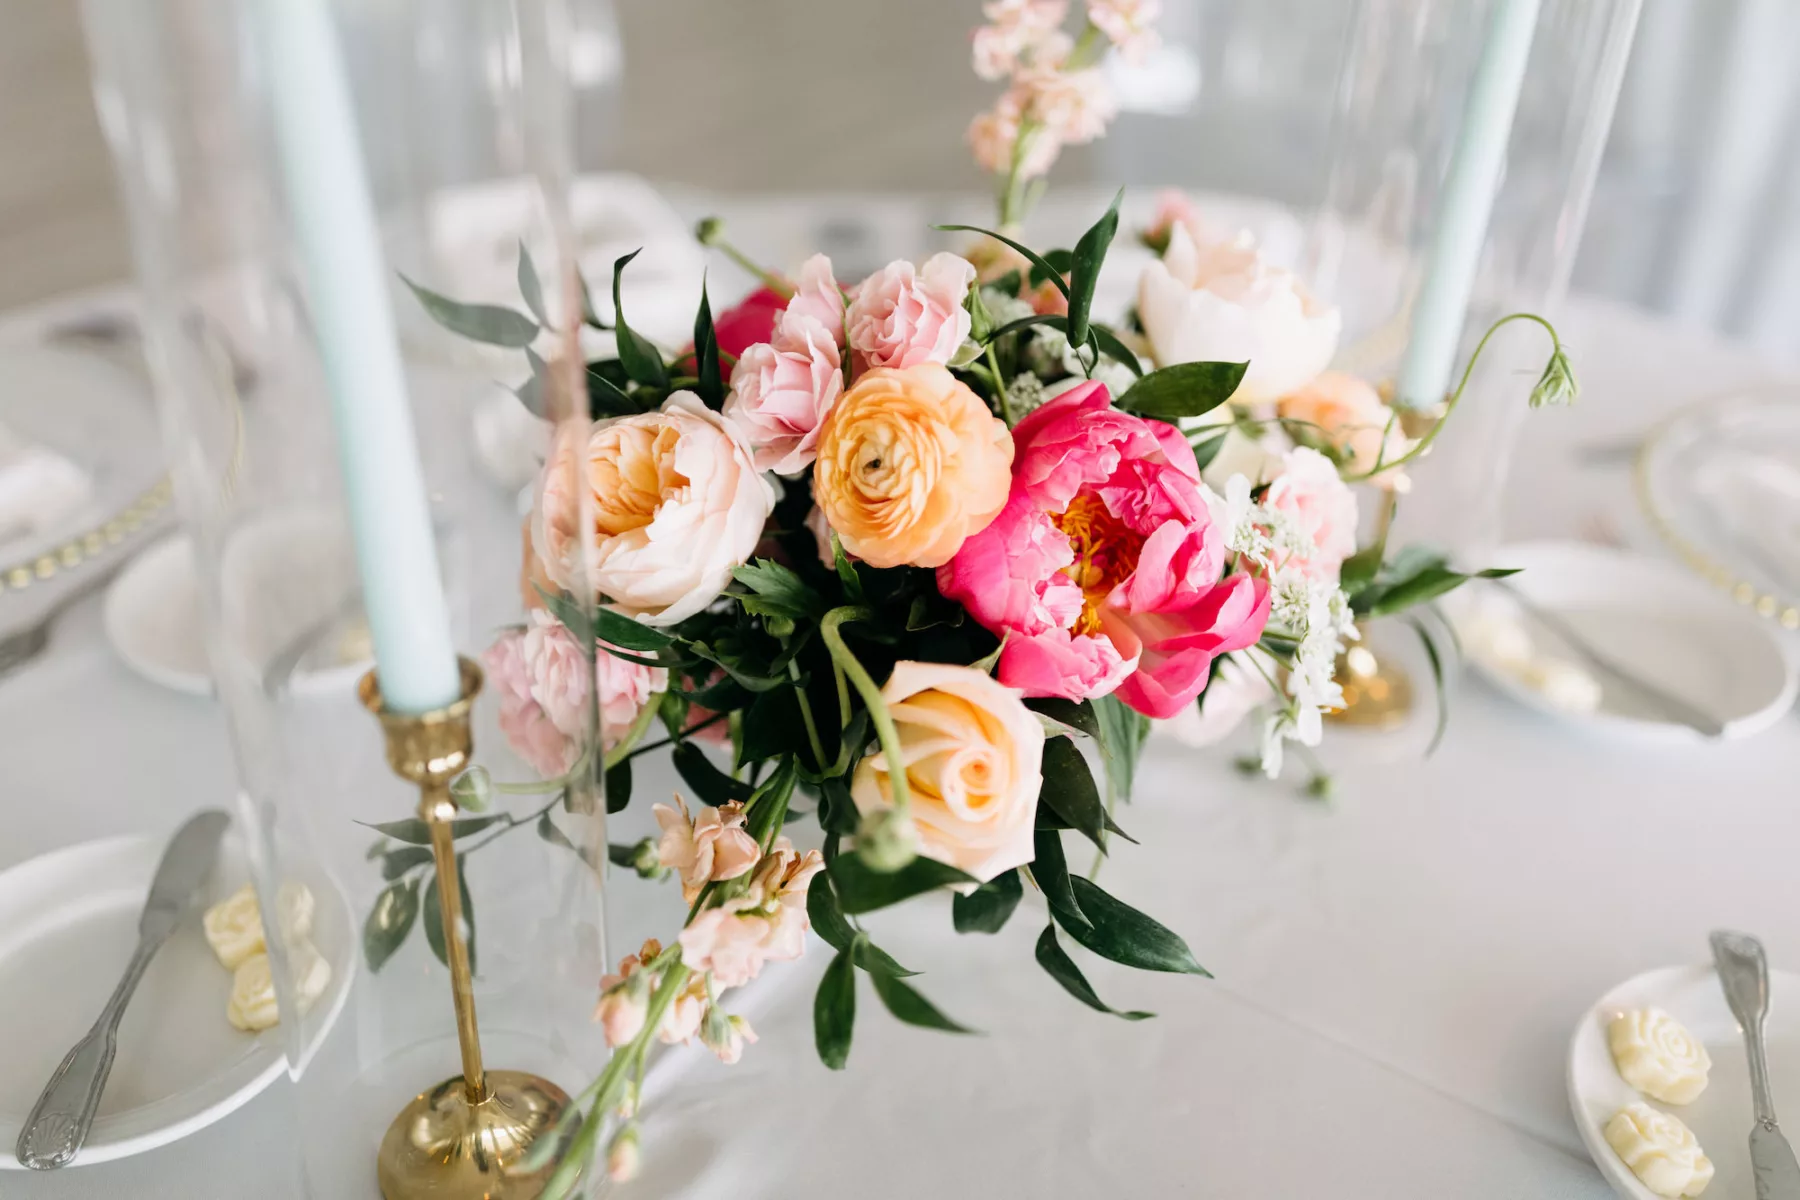 Orange Ranunculus, Pink Peony, Roses, and Greenery Summer Wedding Reception Centerpiece Decor Inspiration | Tampa Bay Florist Beneva Flowers